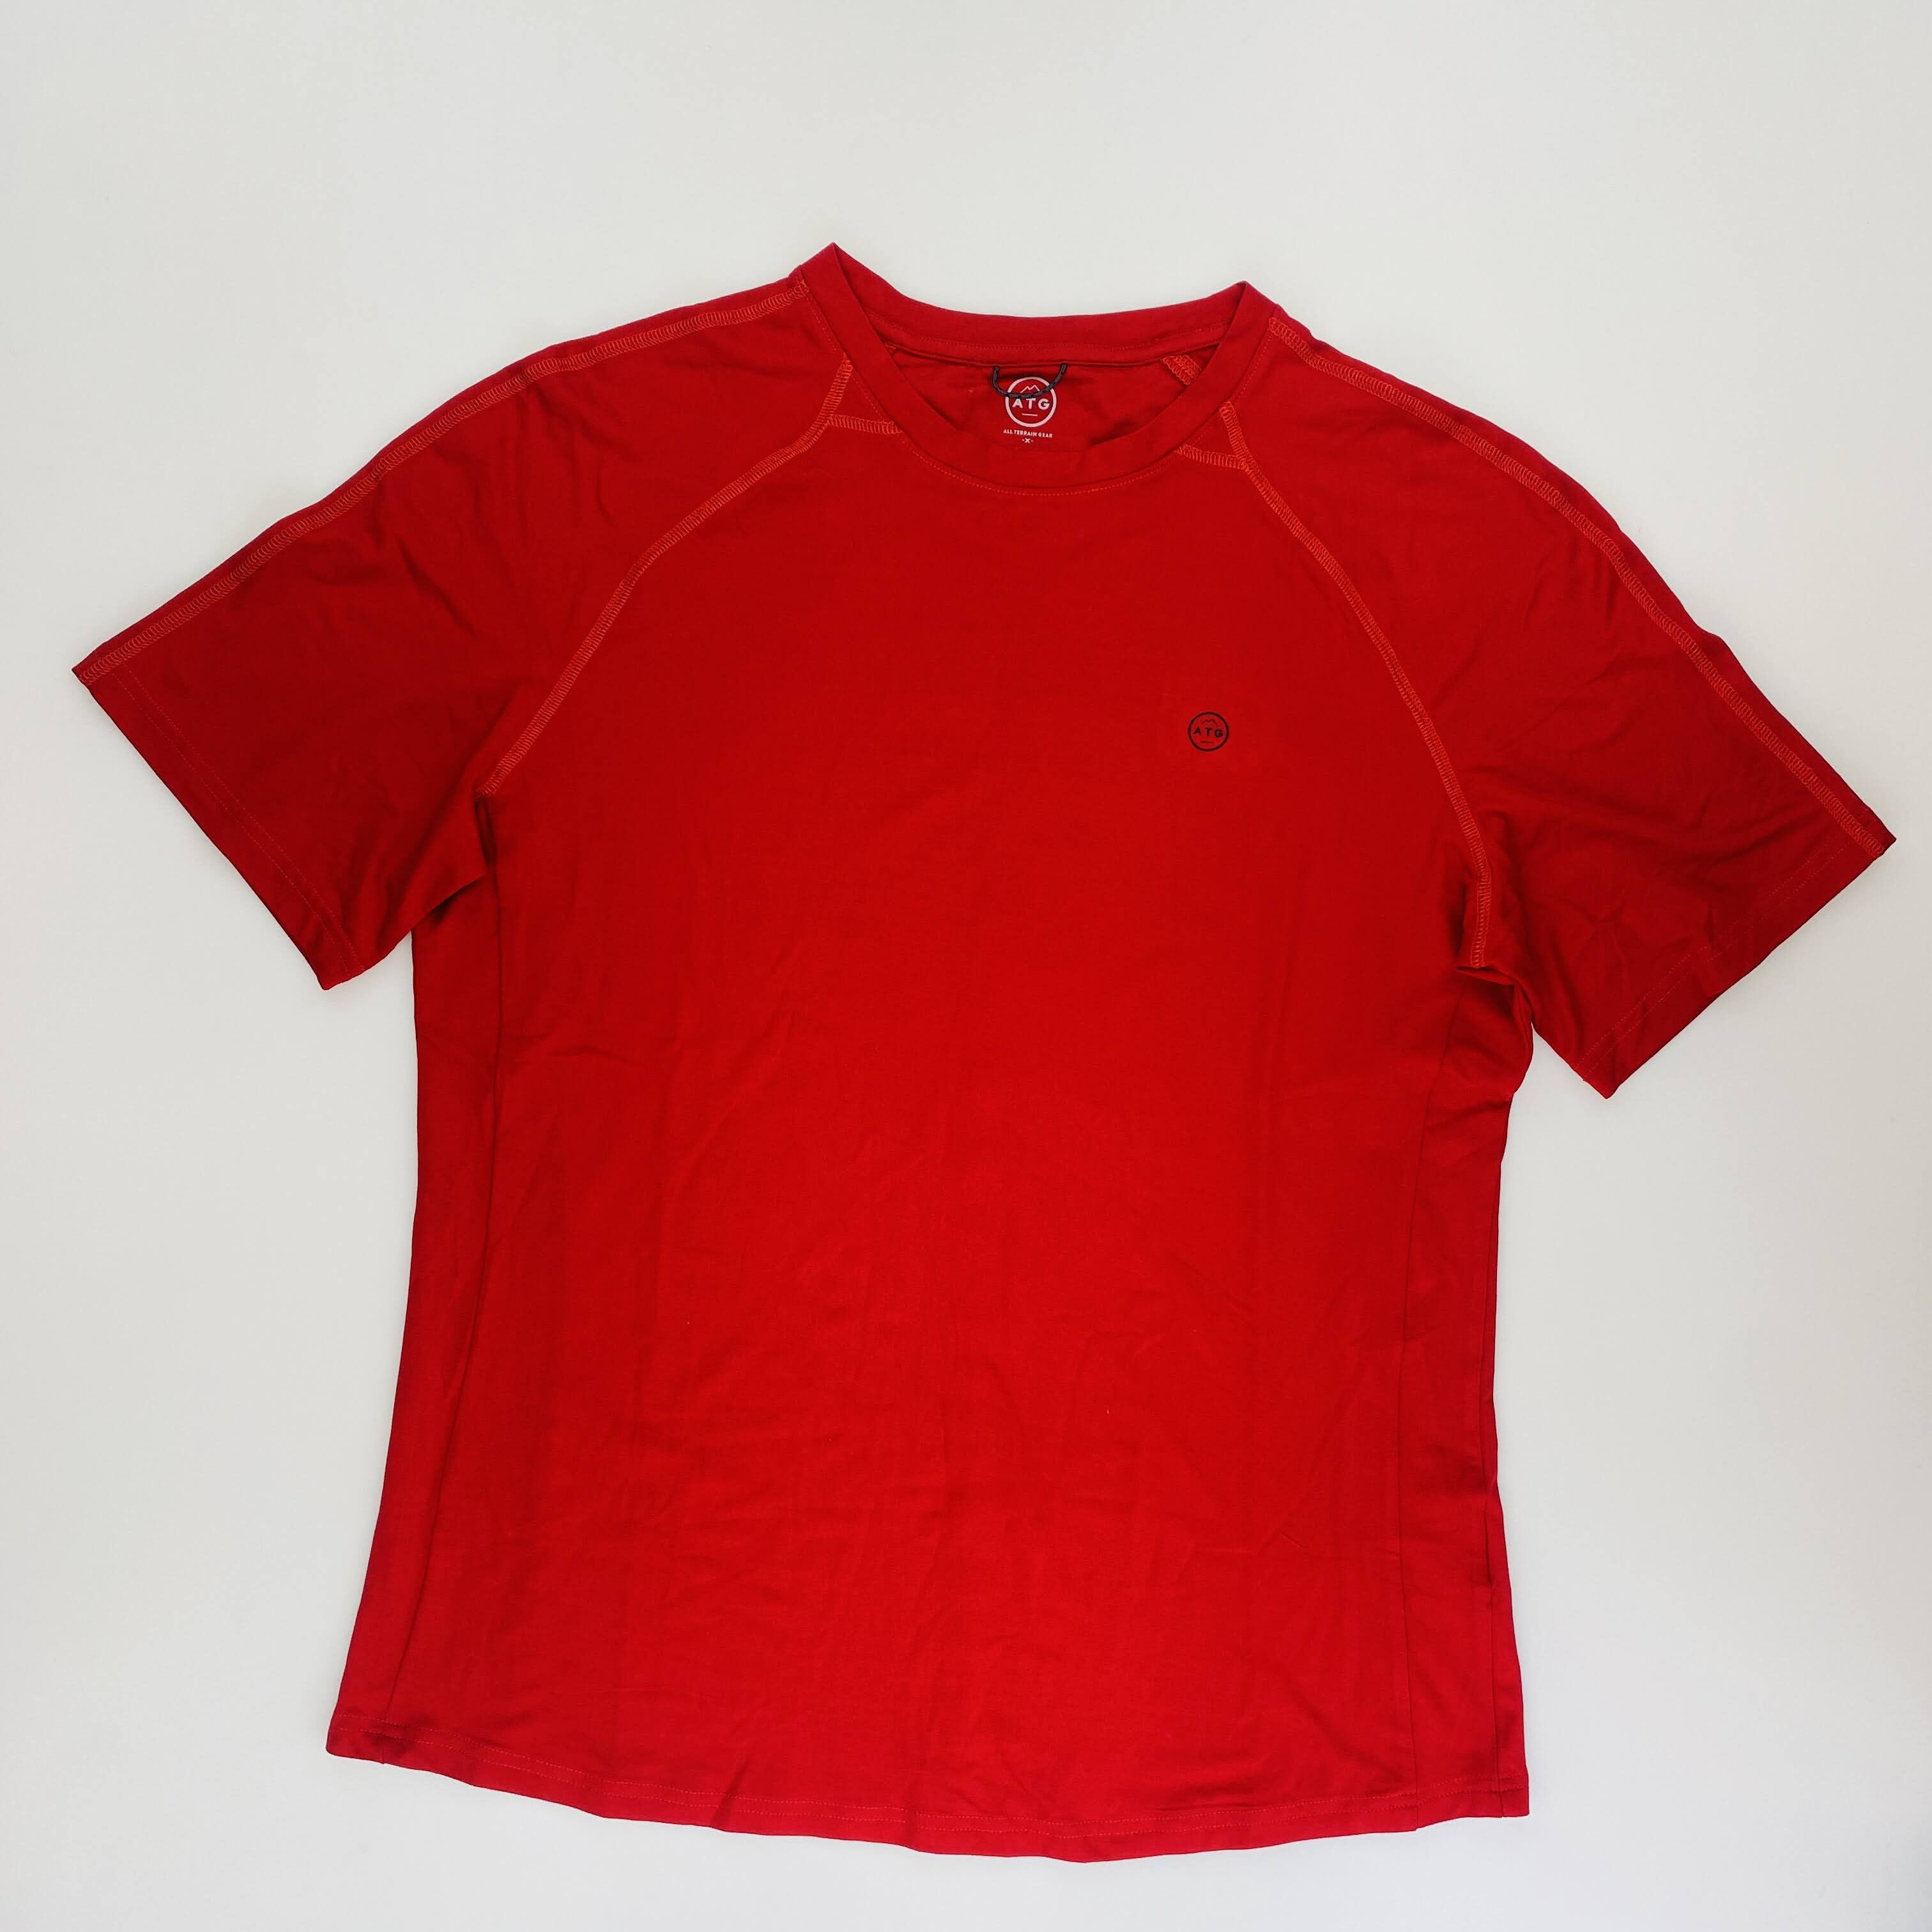 Wrangler Ss Performance T Shirt - T-shirt di seconda mano - Uomo - Rosso - M | Hardloop